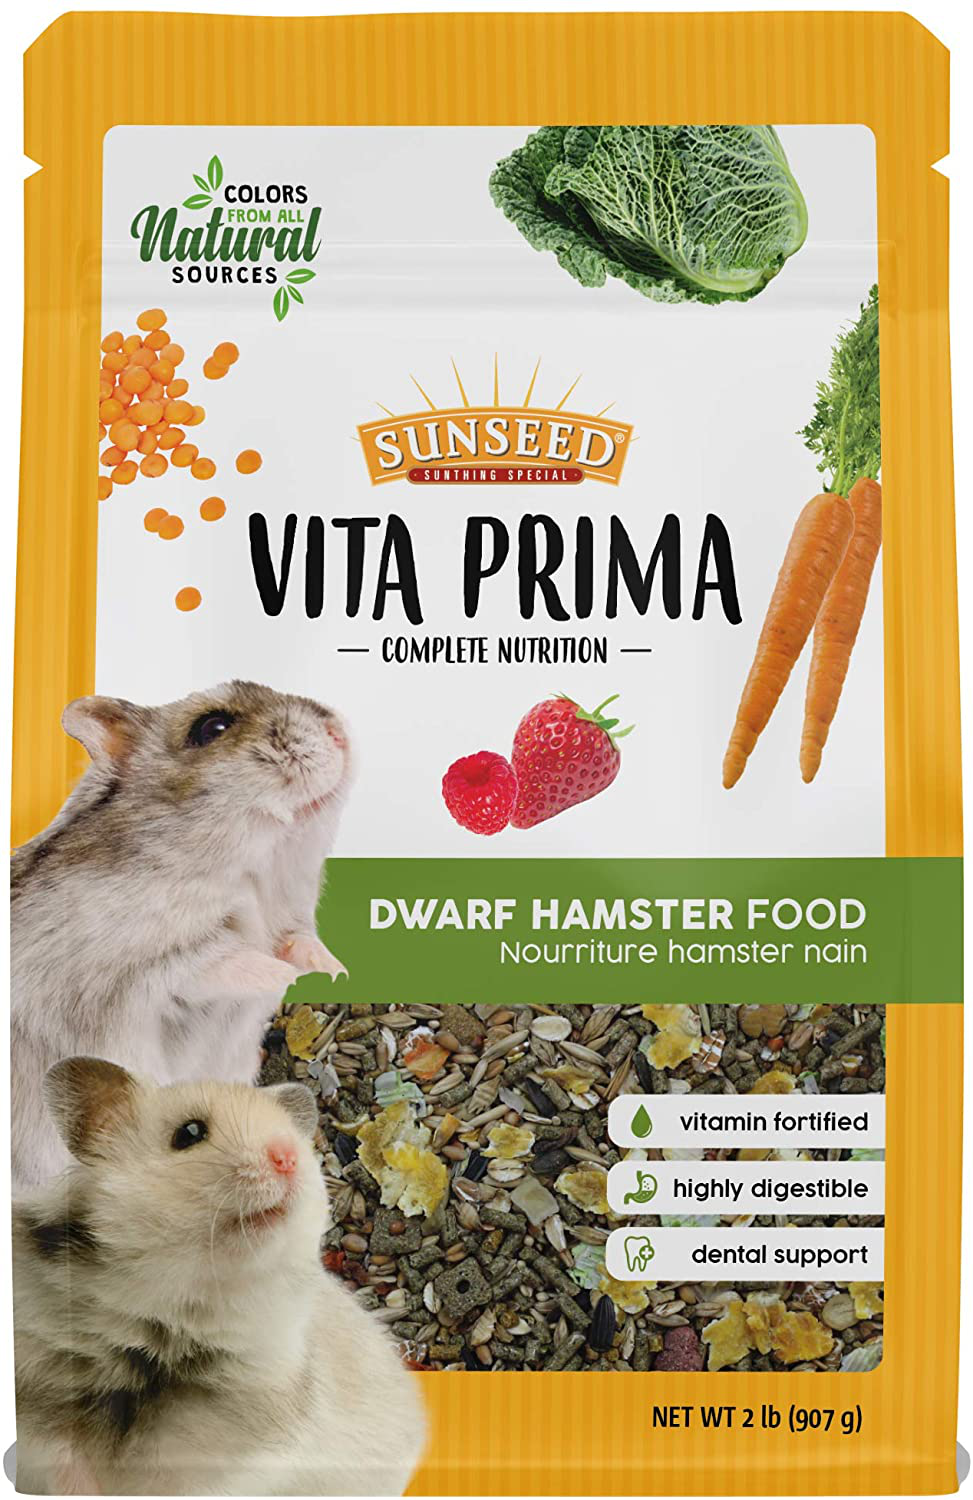 Sun Seed Vita Prima Dwarf Hamster Food